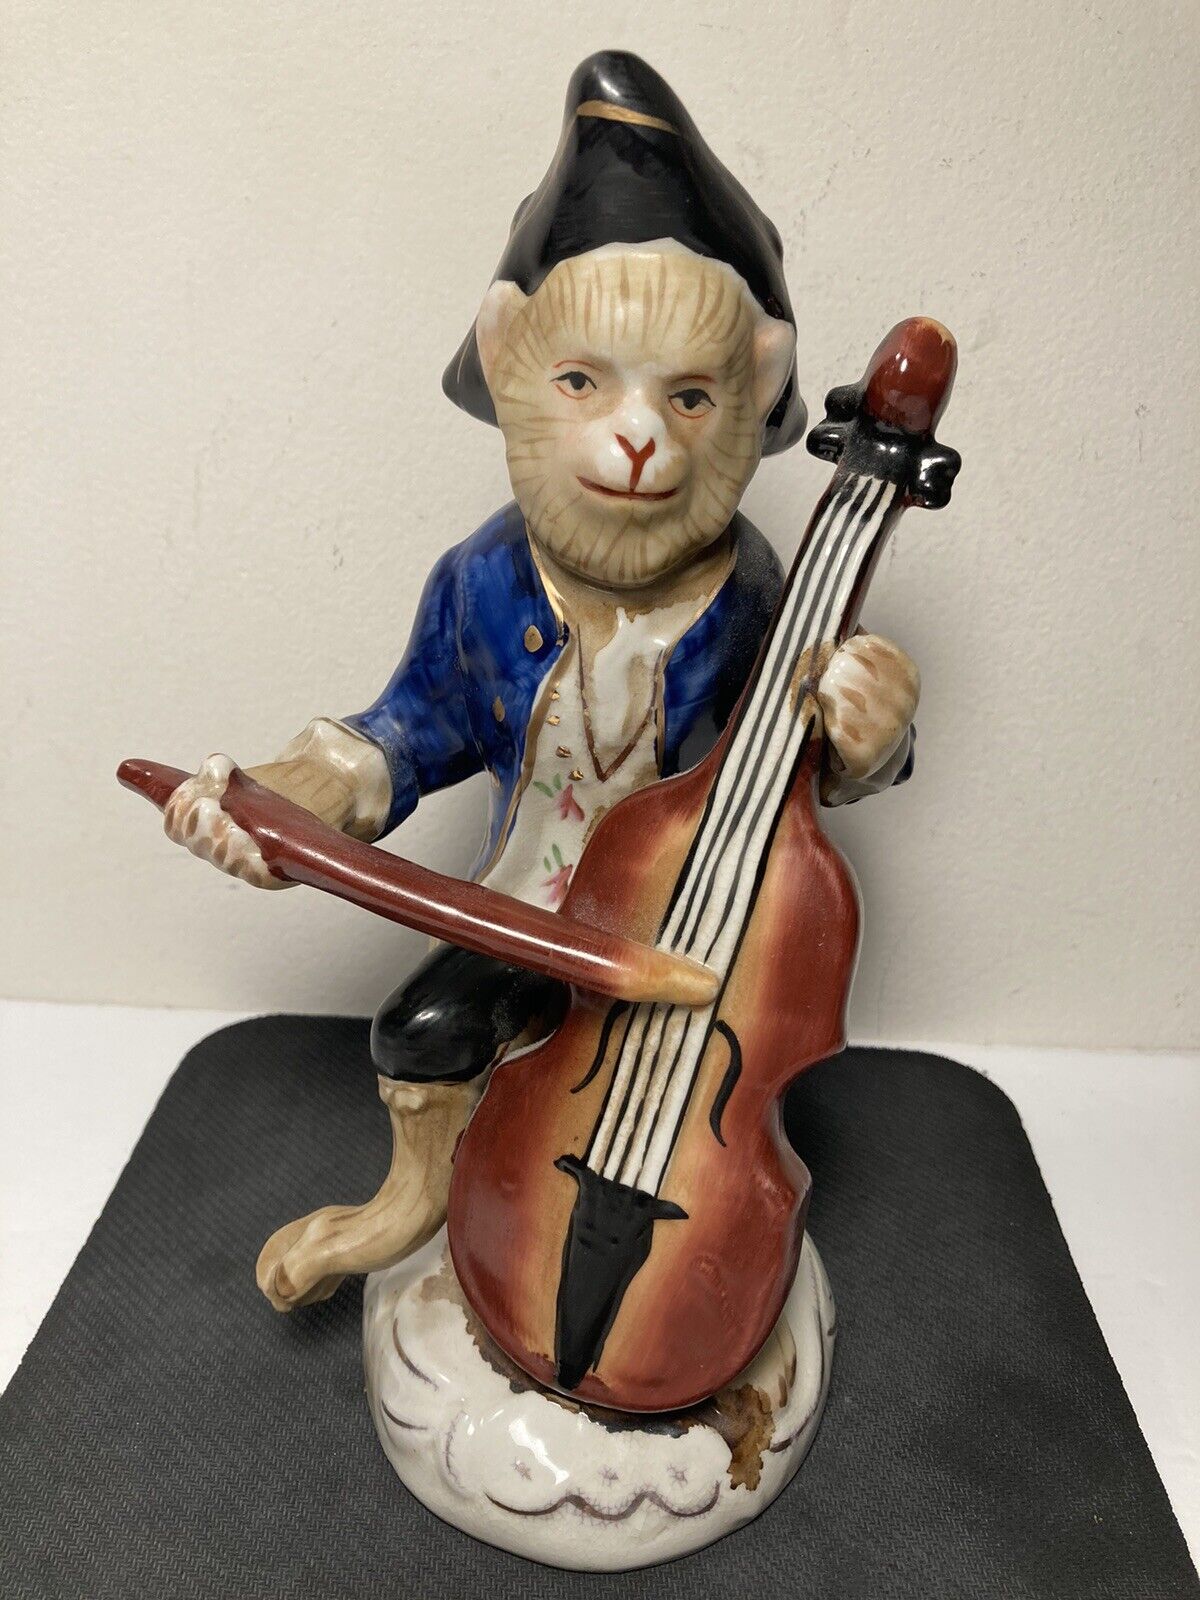 Vintage Monkey Cello Orchestra Player Porcelain Musician Figurine 9”